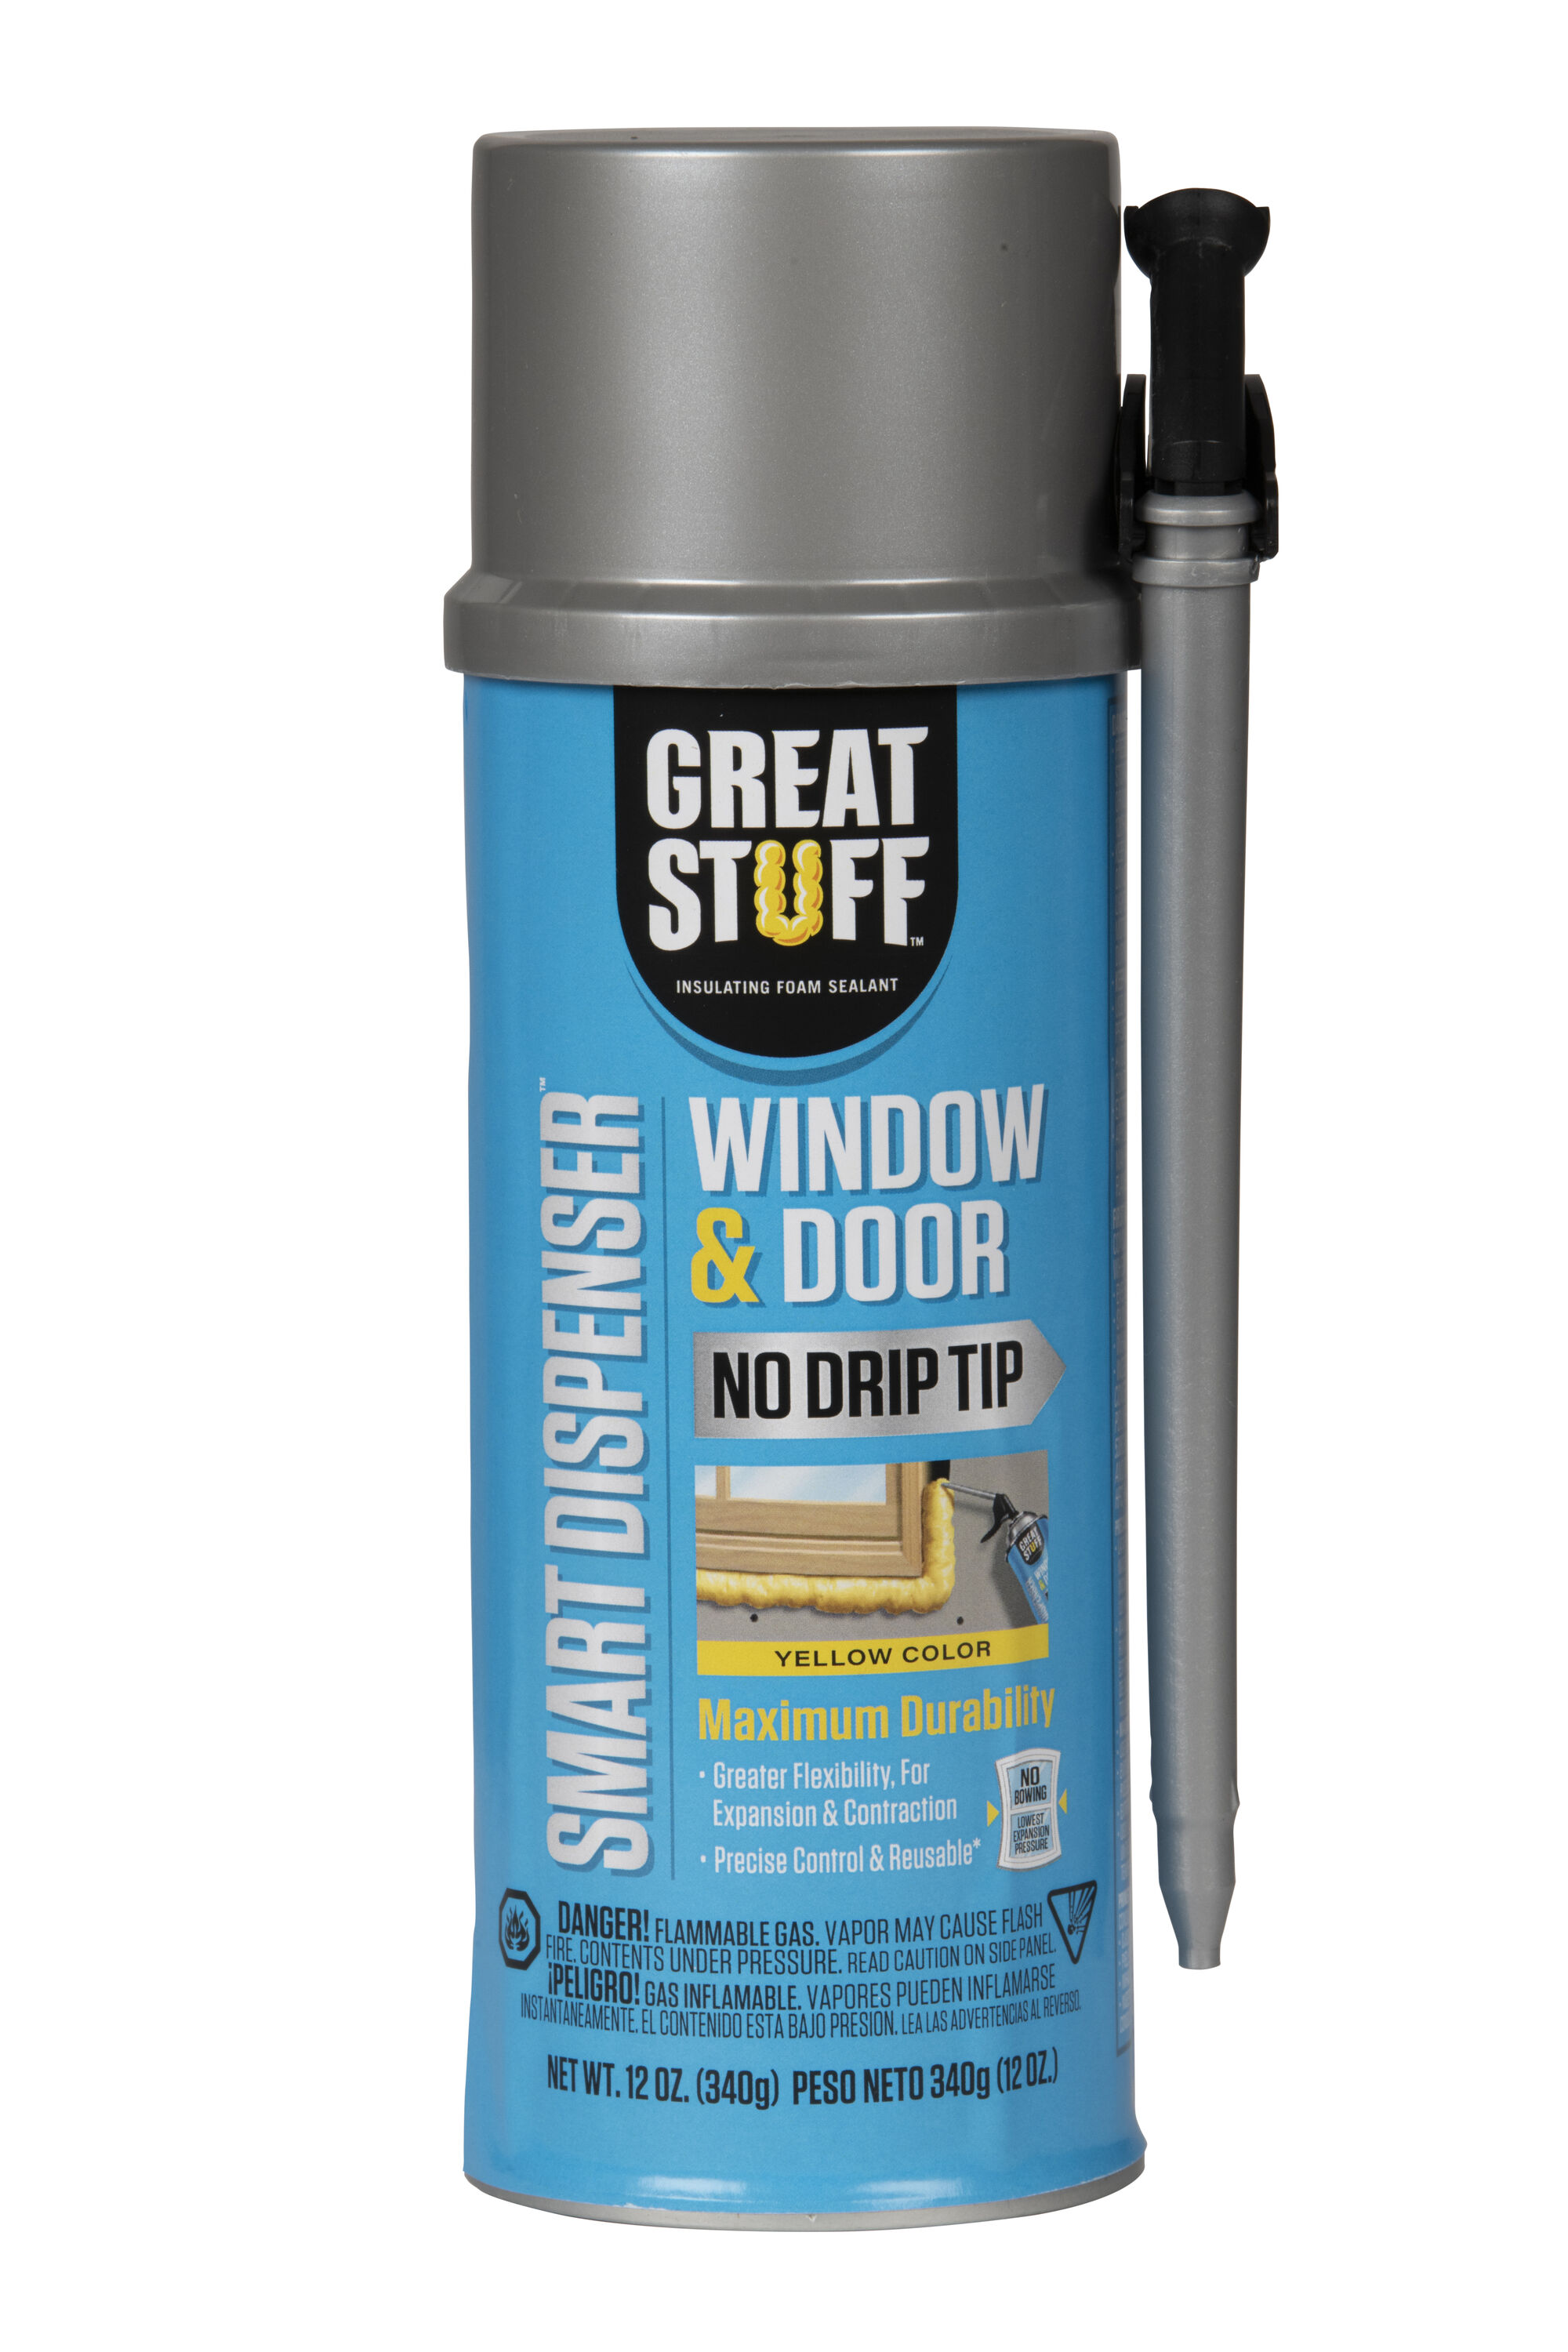 GREAT STUFF PRO - Gaps & Cracks Insulating Foam Sealant 24 oz with Reusable Straw